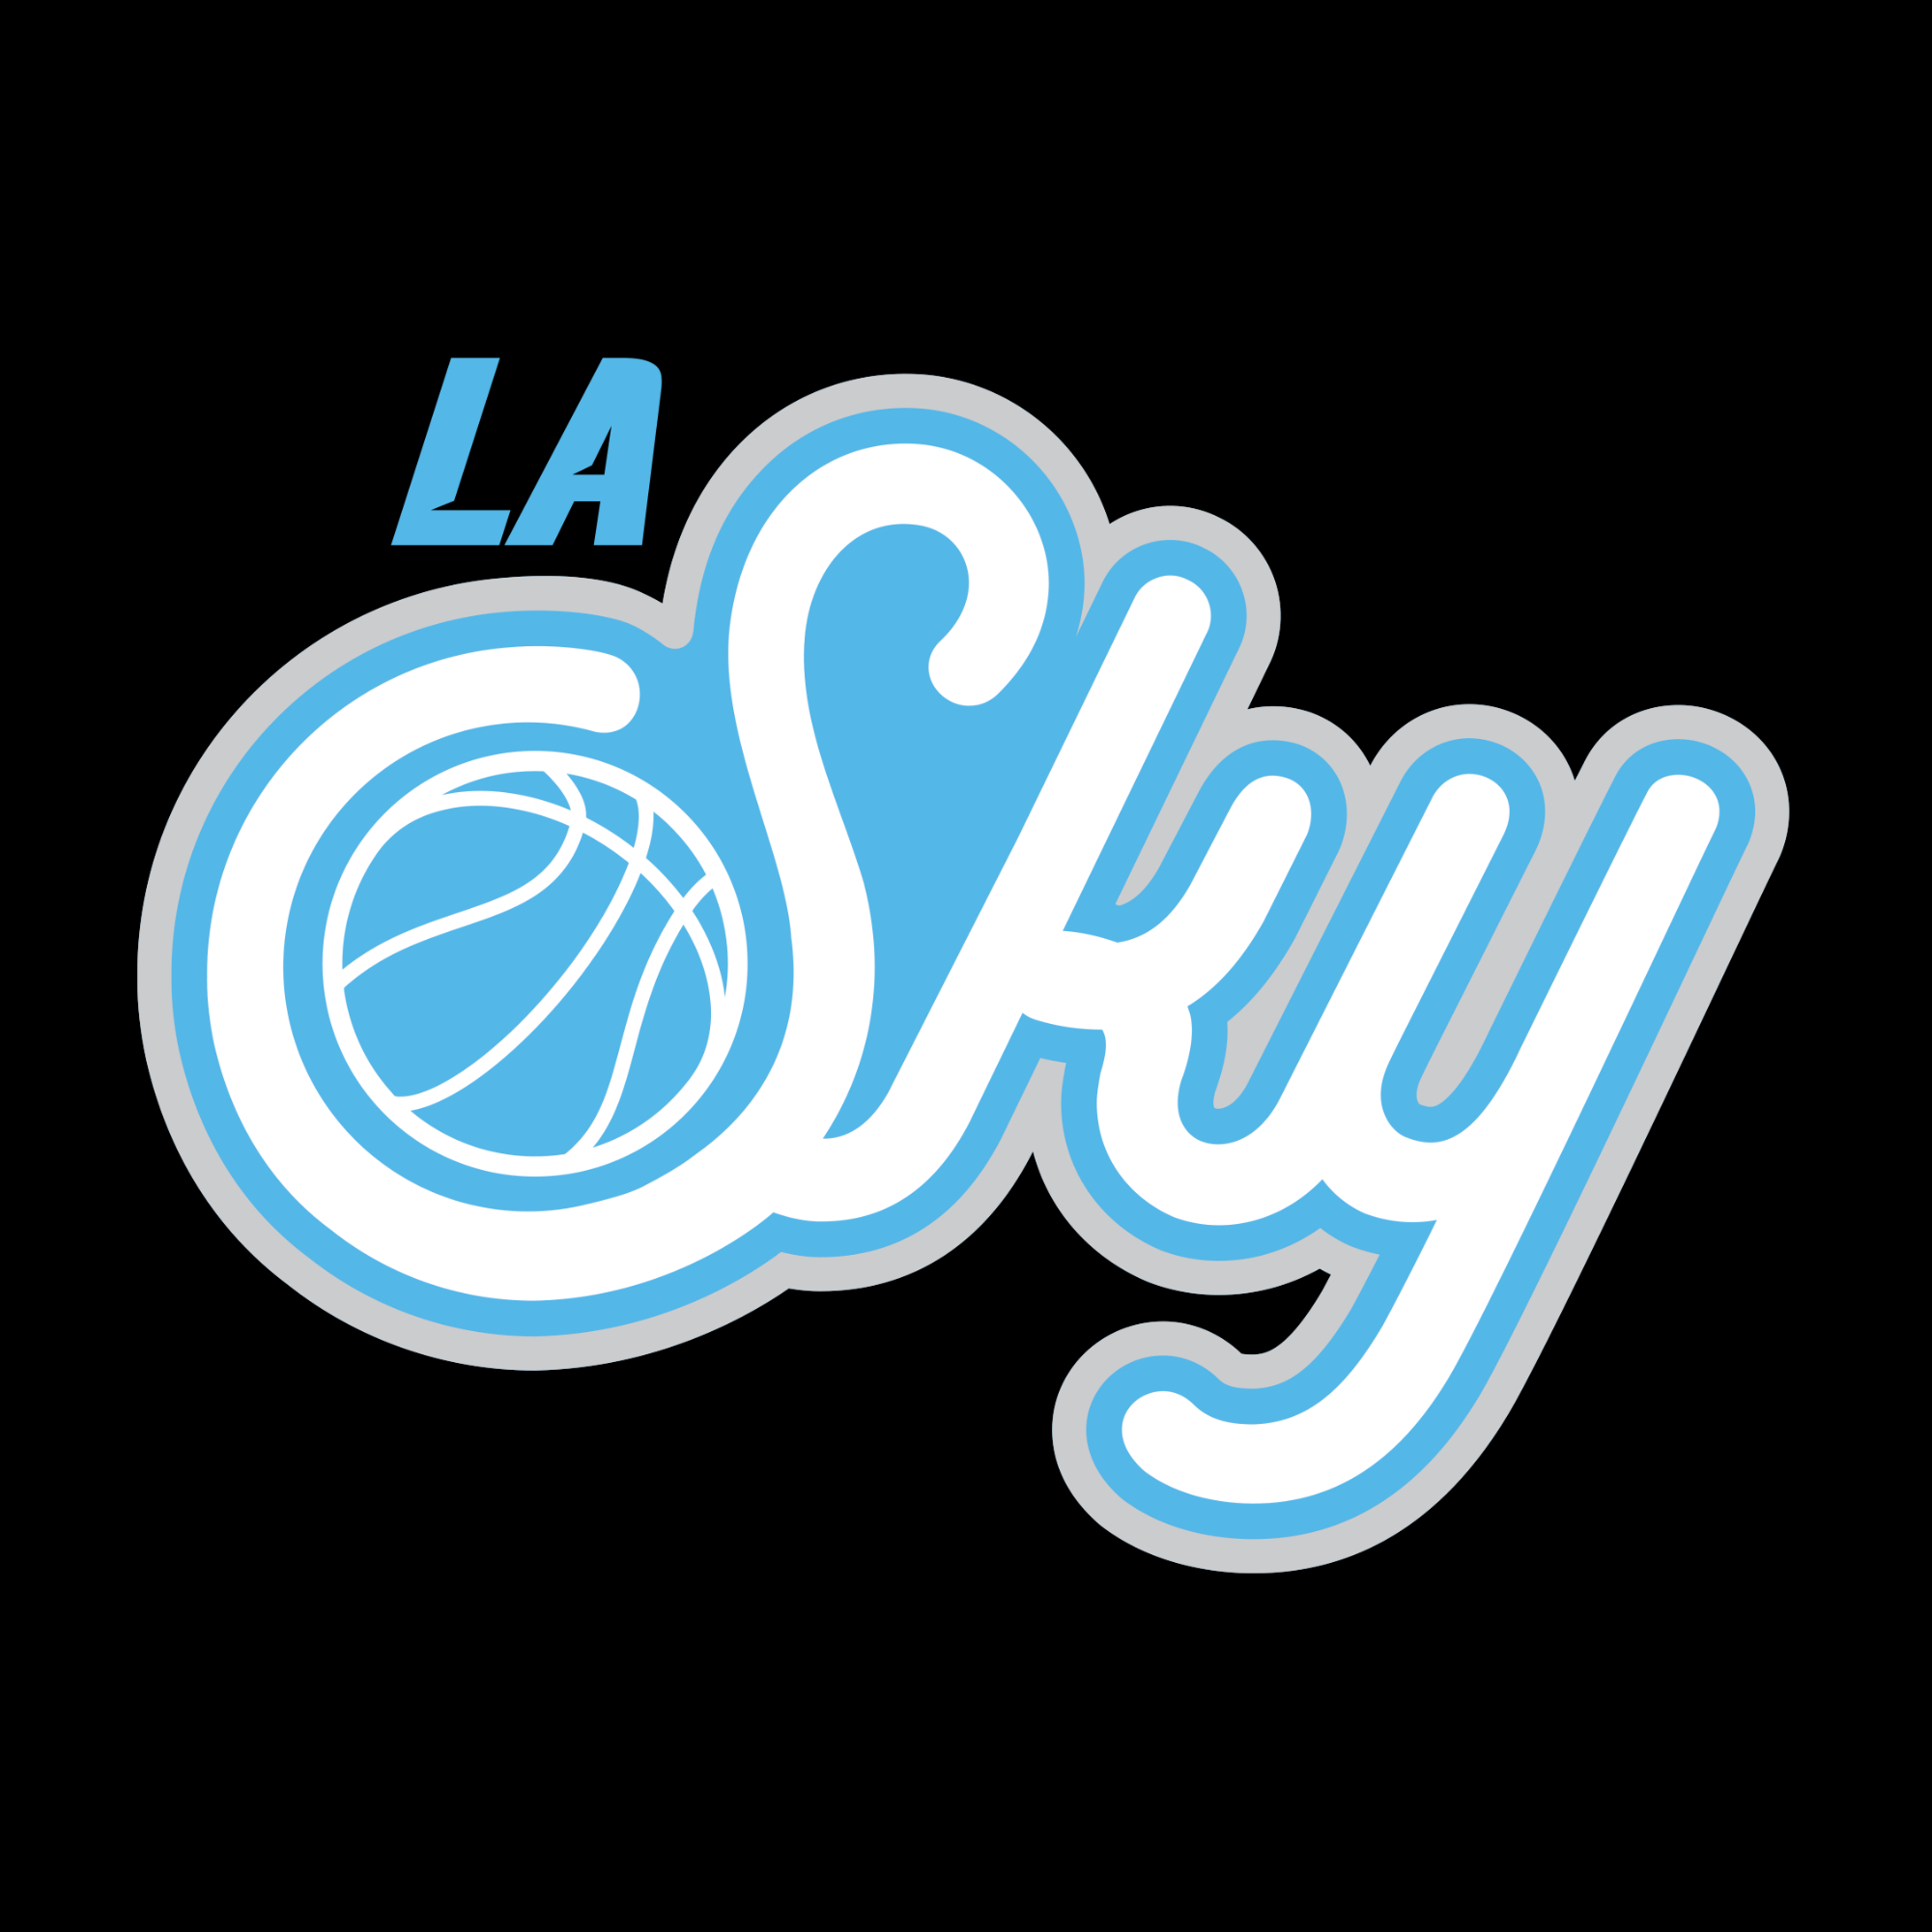 Organization logo for LA Sky